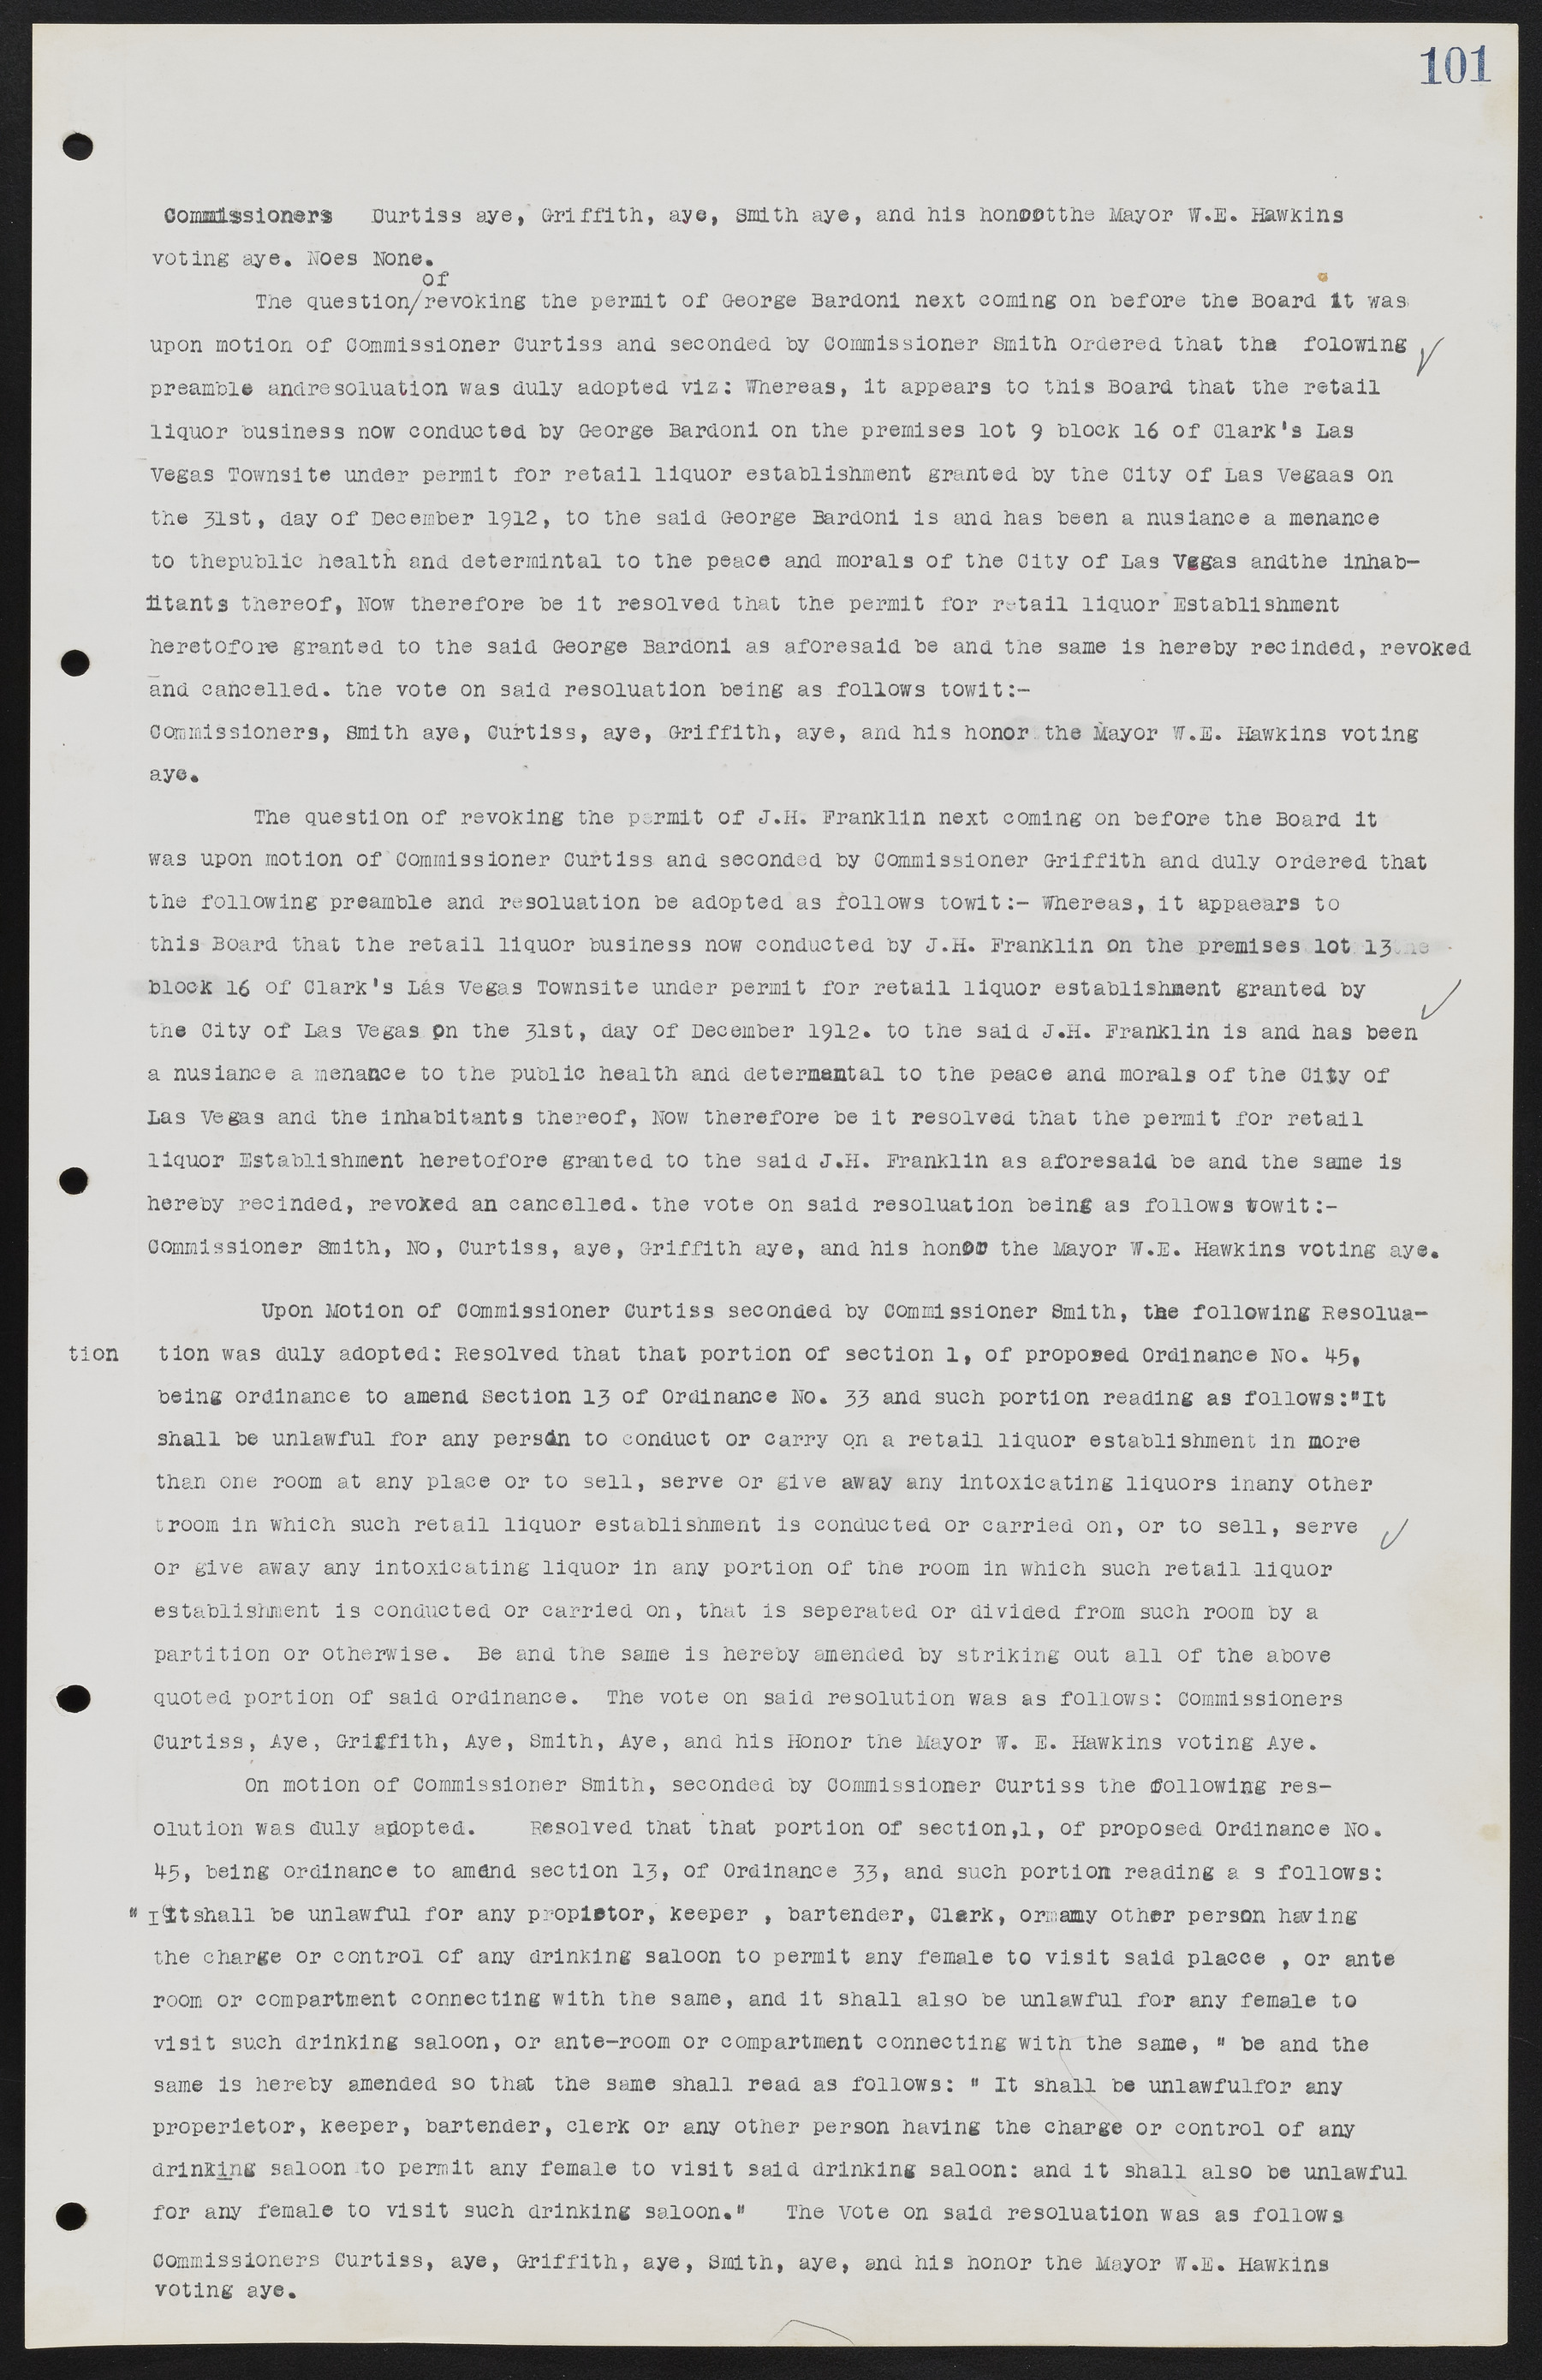 Las Vegas City Commission Minutes, June 22, 1911 to February 7, 1922, lvc000001-115